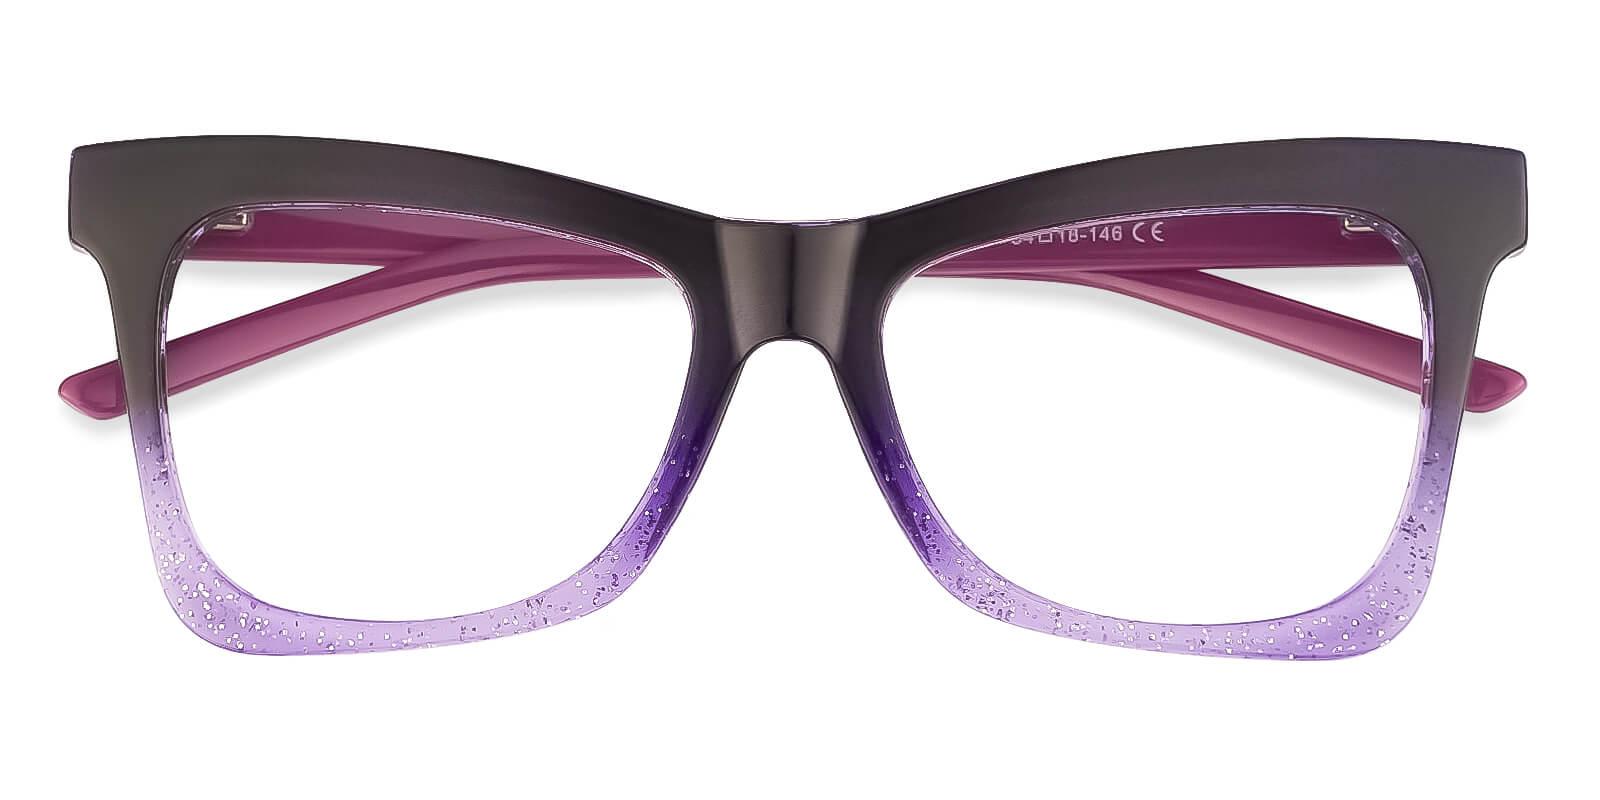 Focal Purple TR Eyeglasses , Fashion , UniversalBridgeFit Frames from ABBE Glasses